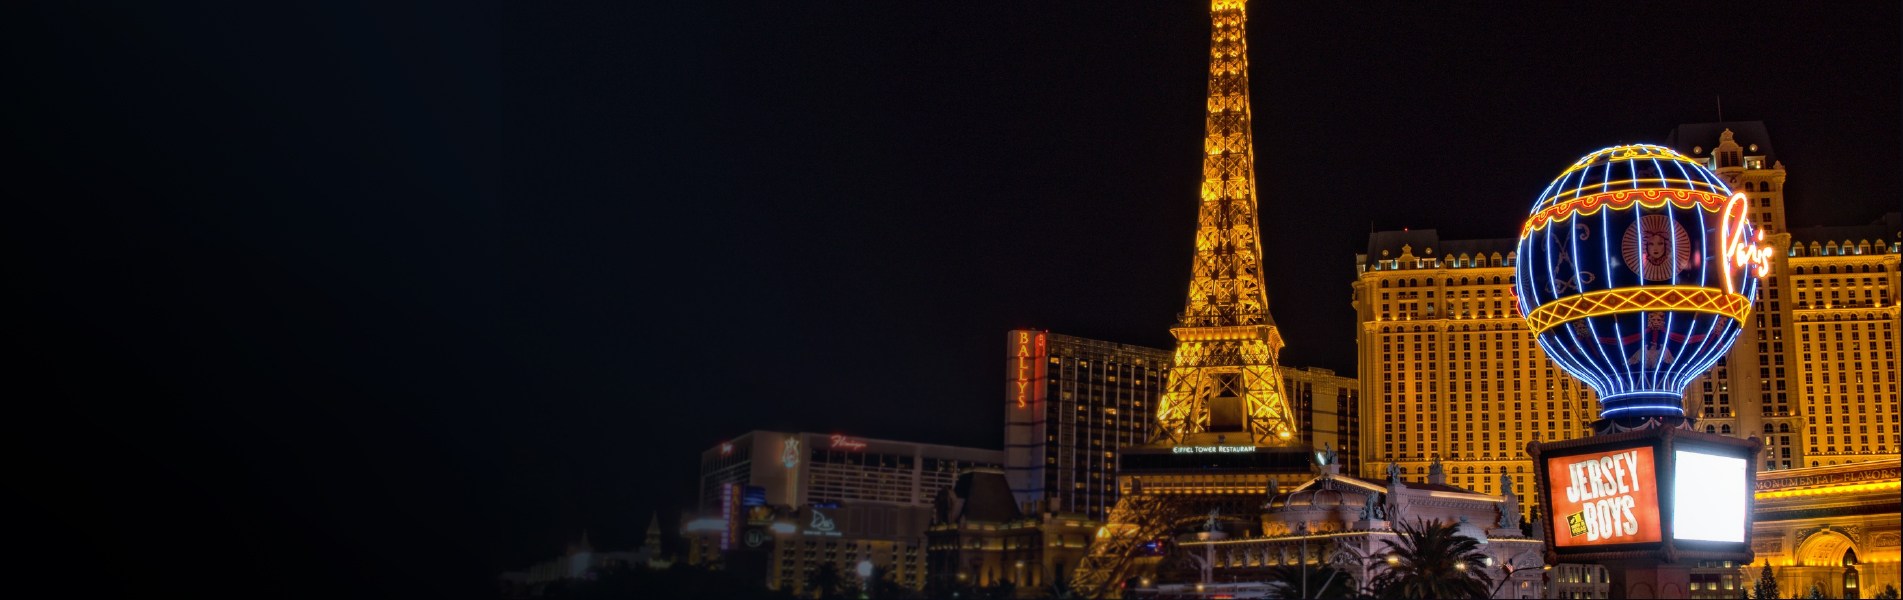 Paris Las Vegas Casino 1